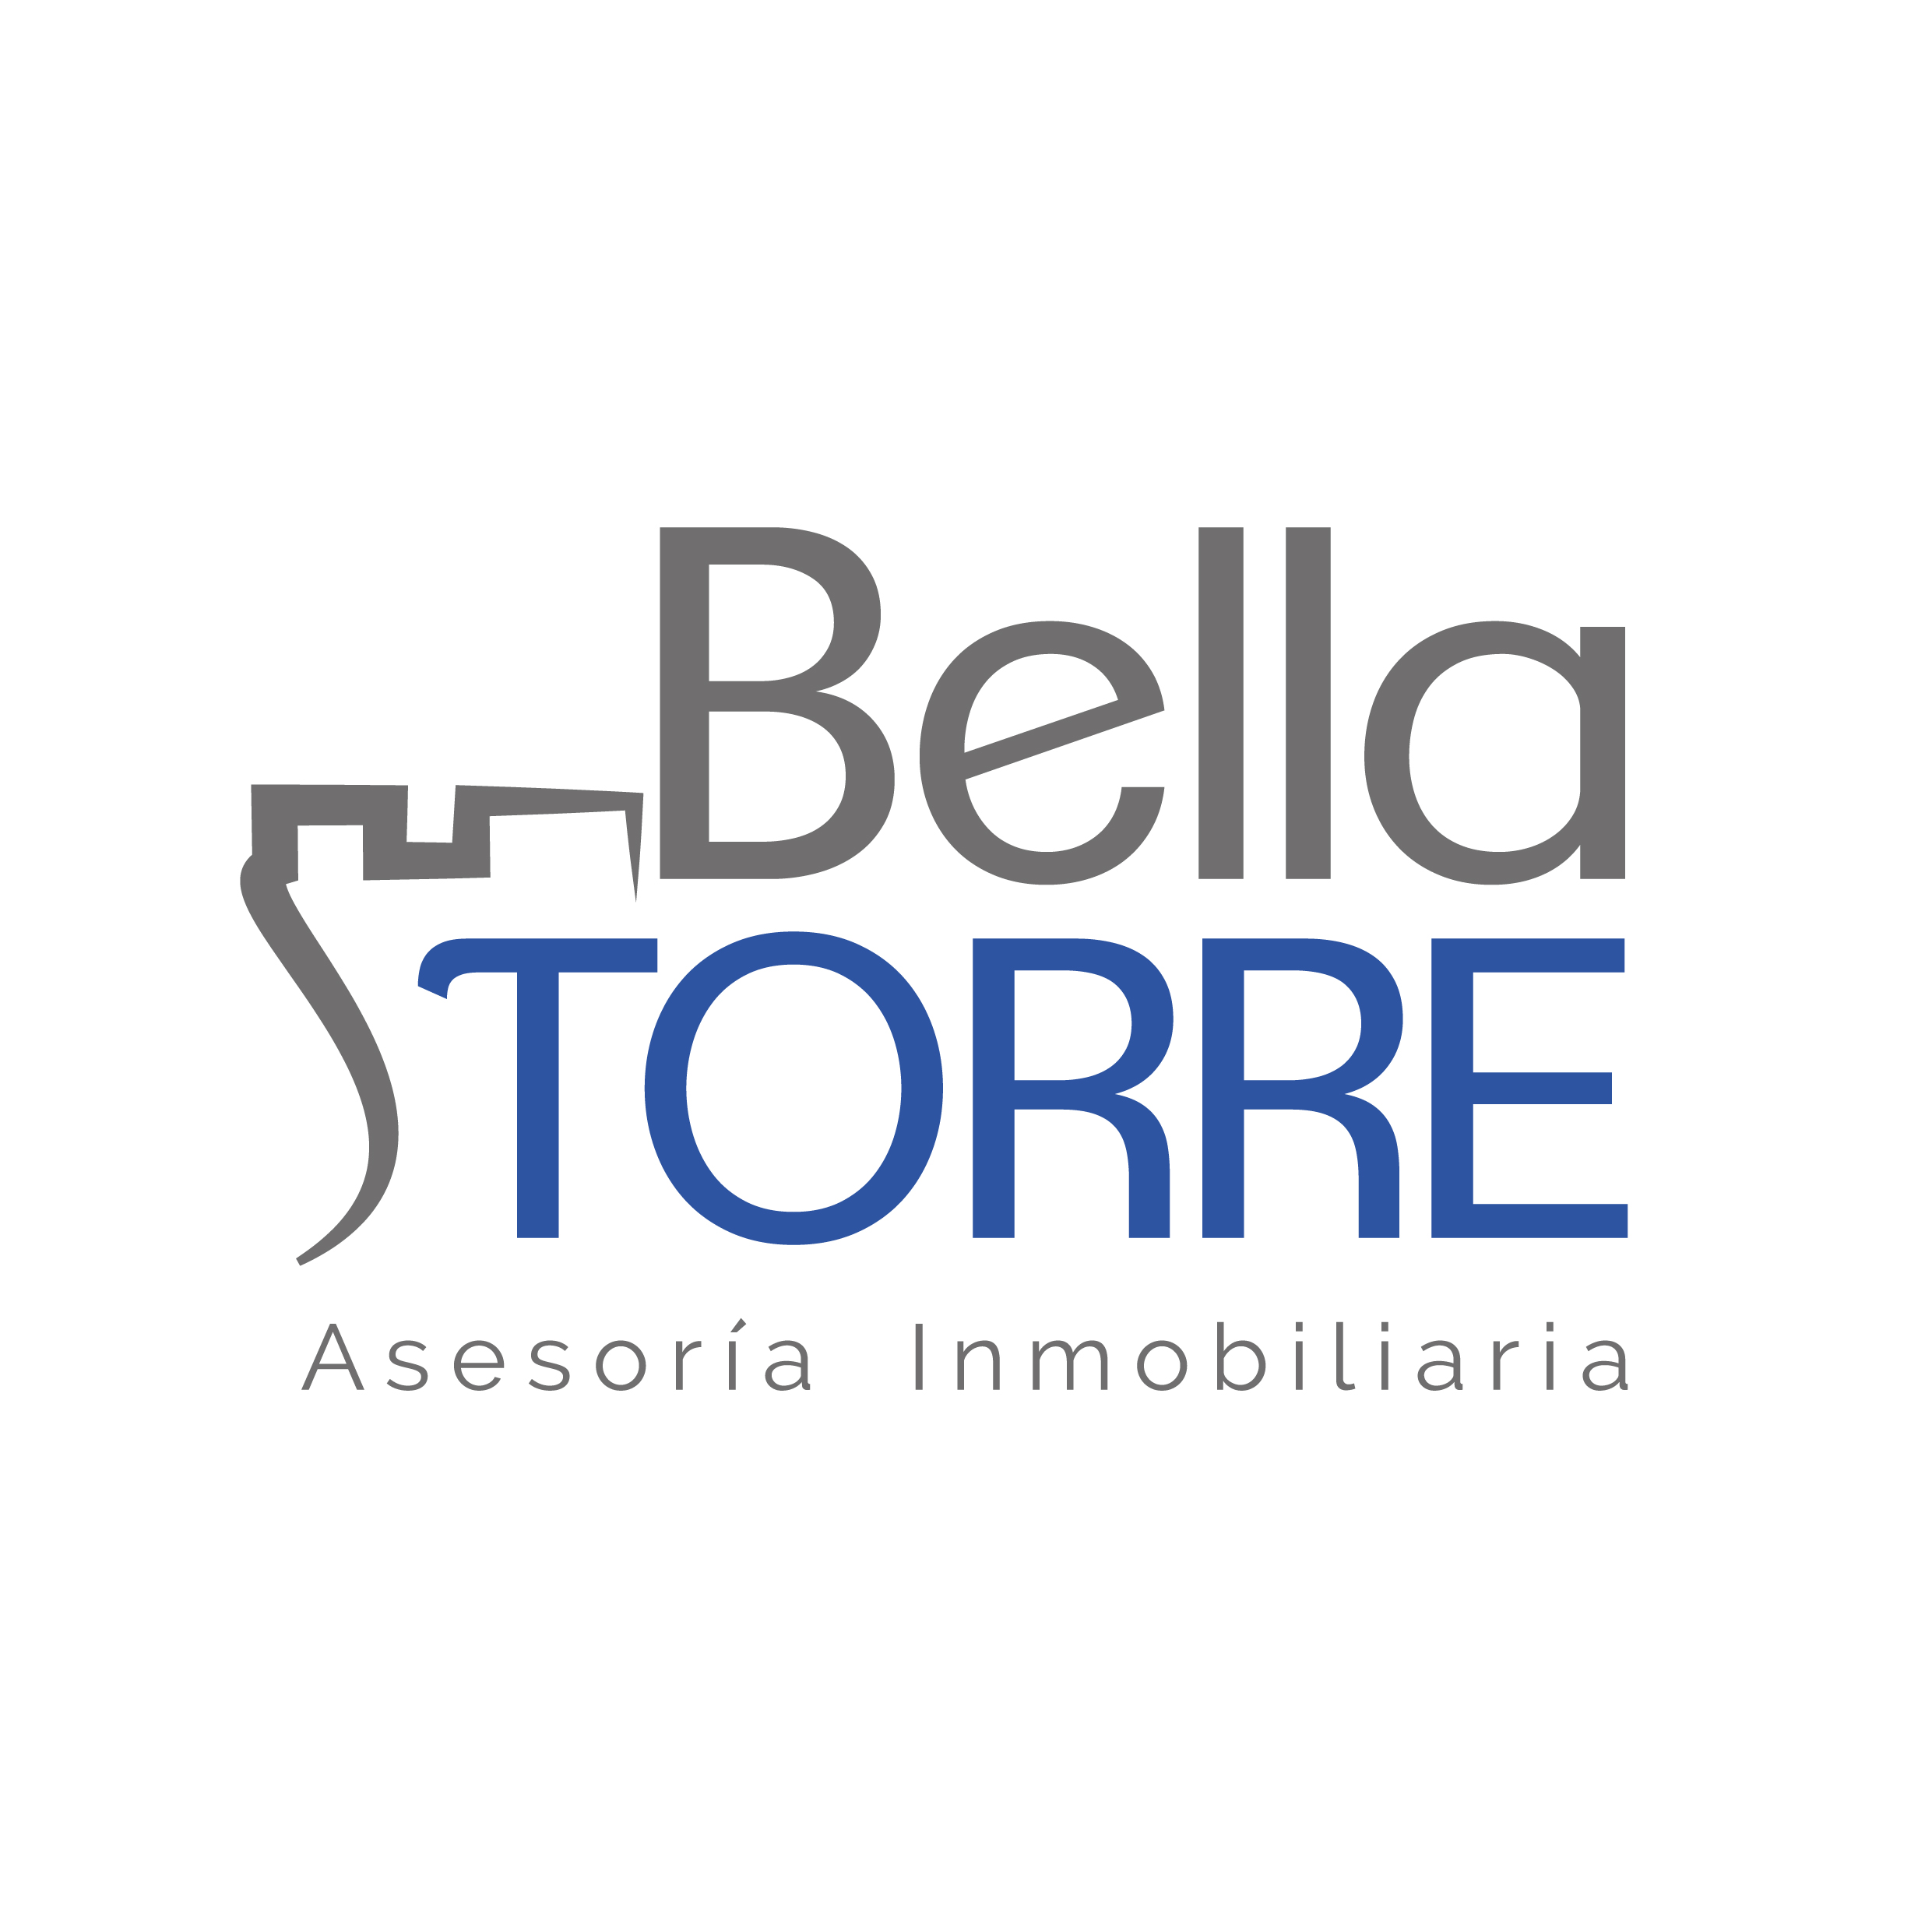 BELLA TORRE - ASESORIA INMOBILIARIA